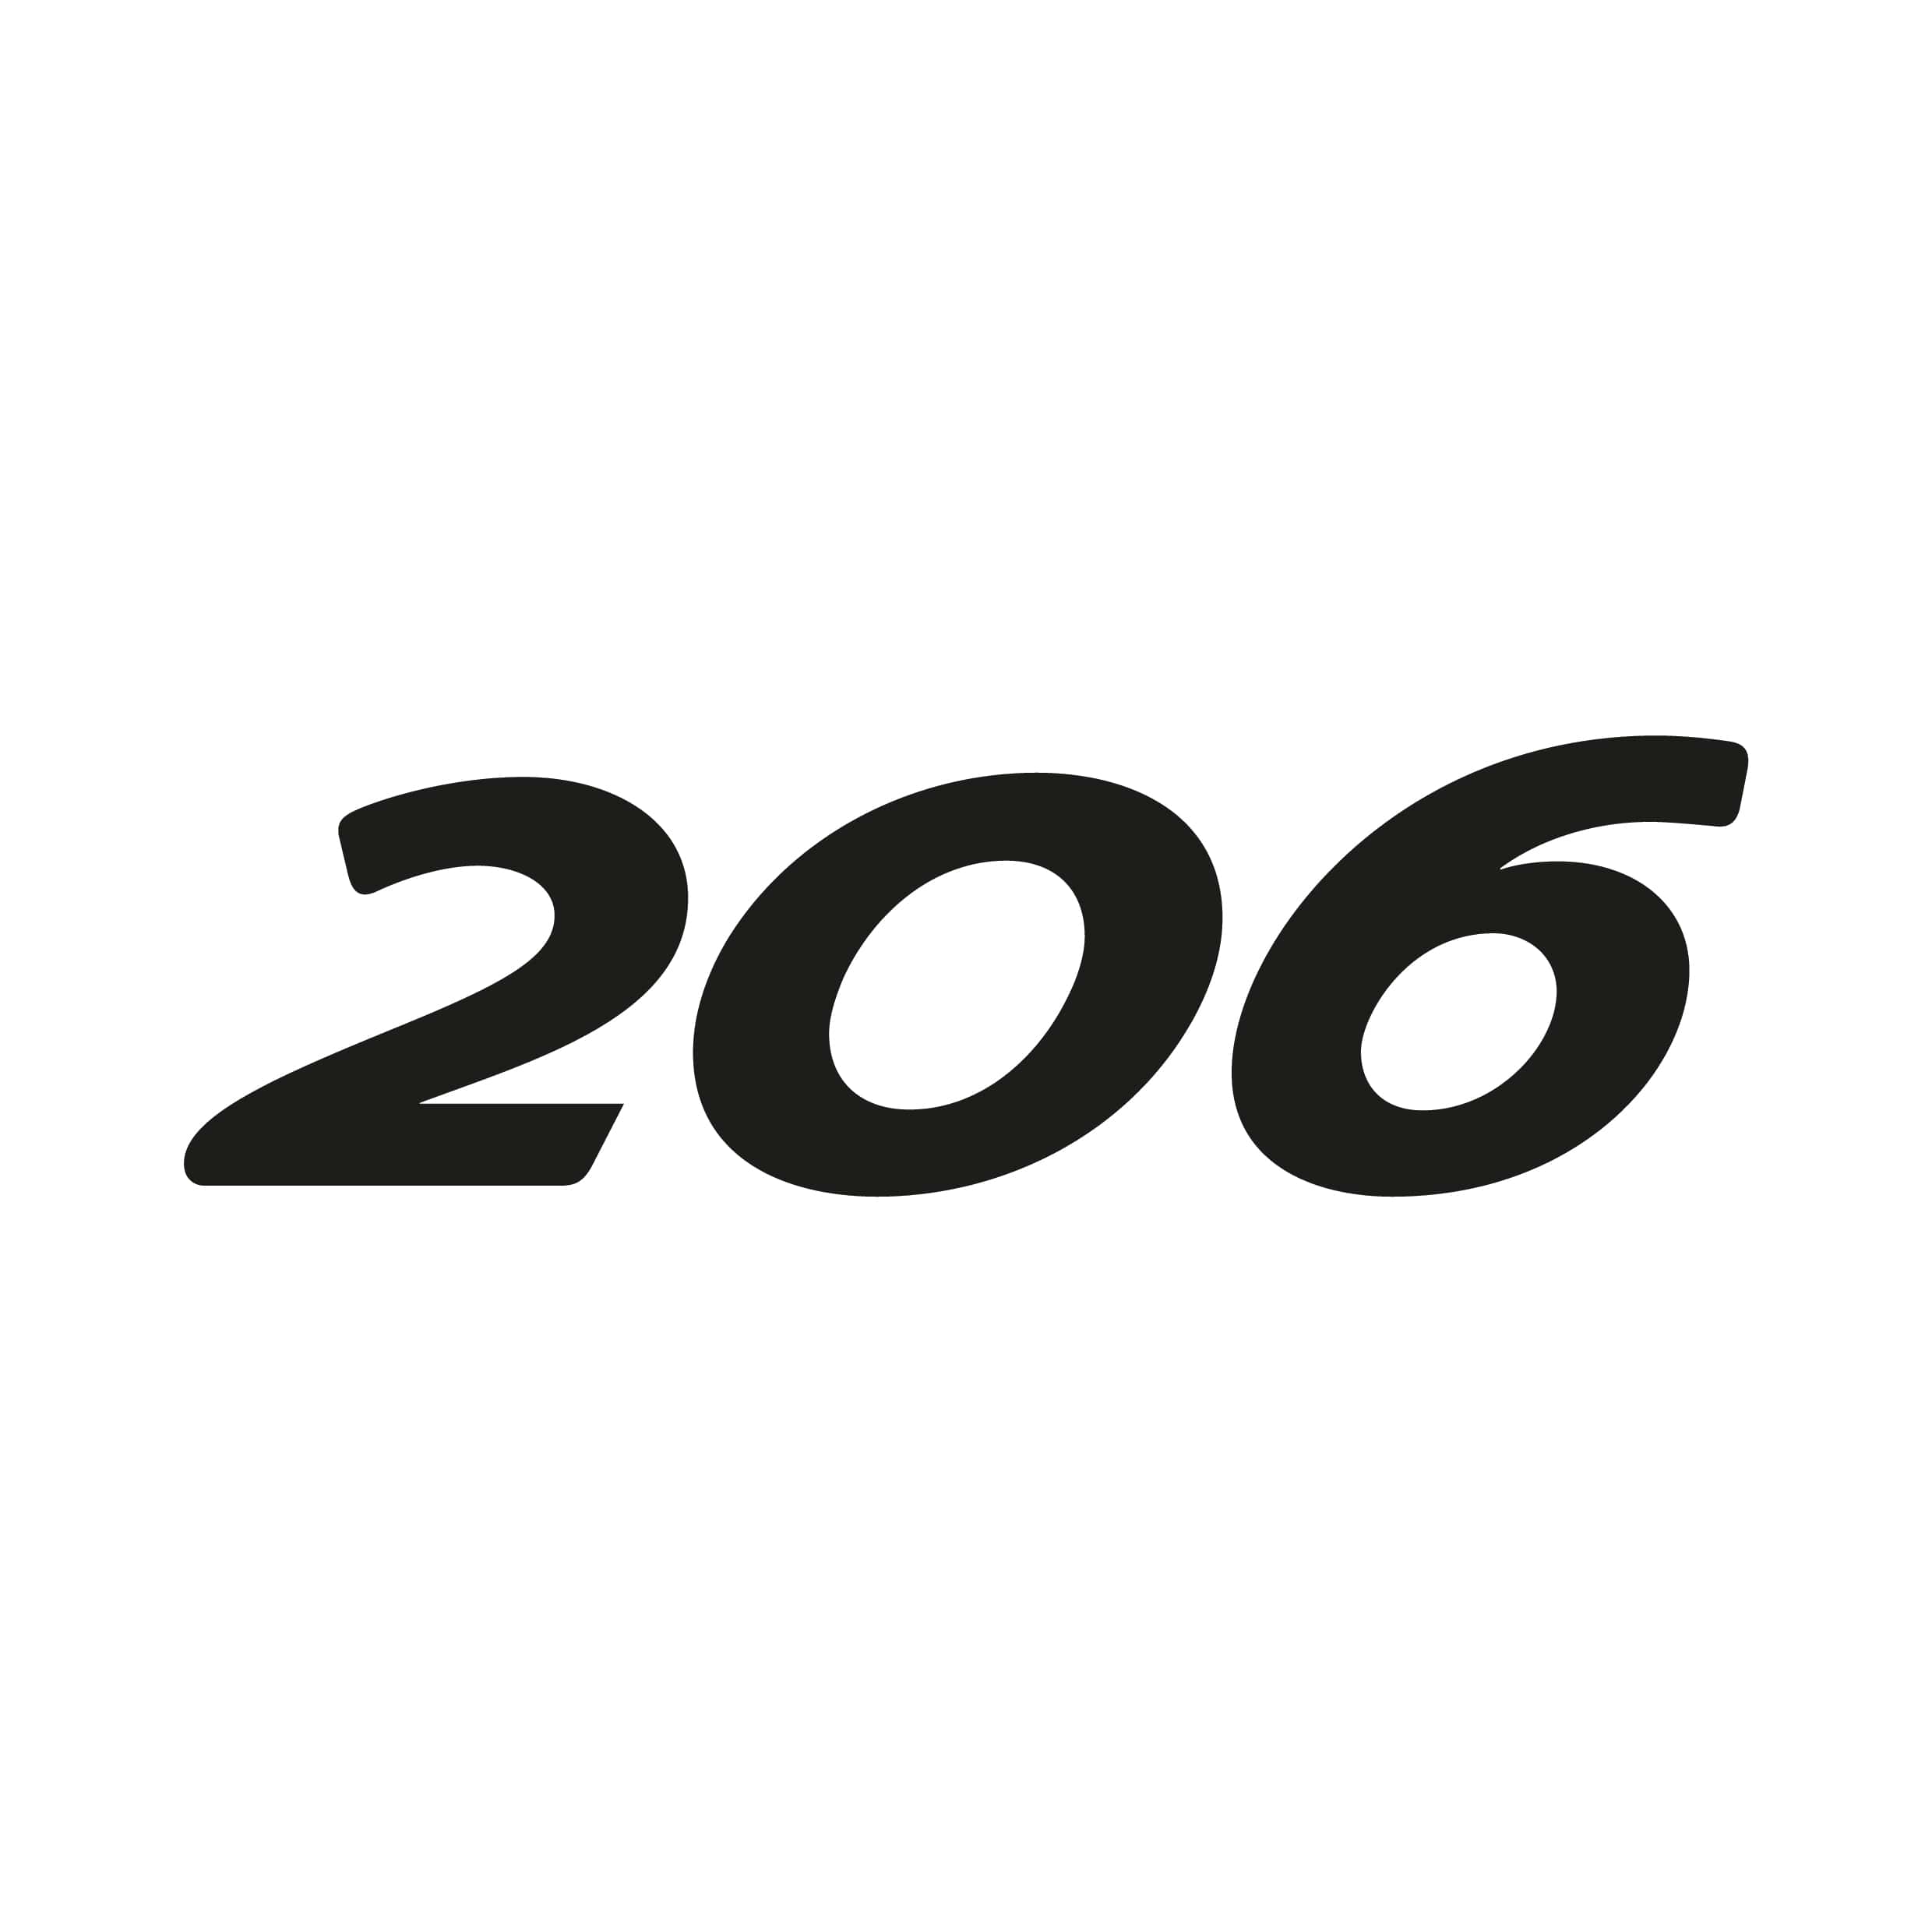 stickers-peugeot-206-ref36-autocollant-voiture-sticker-auto-autocollants-decals-sponsors-racing-tuning-sport-logo-min